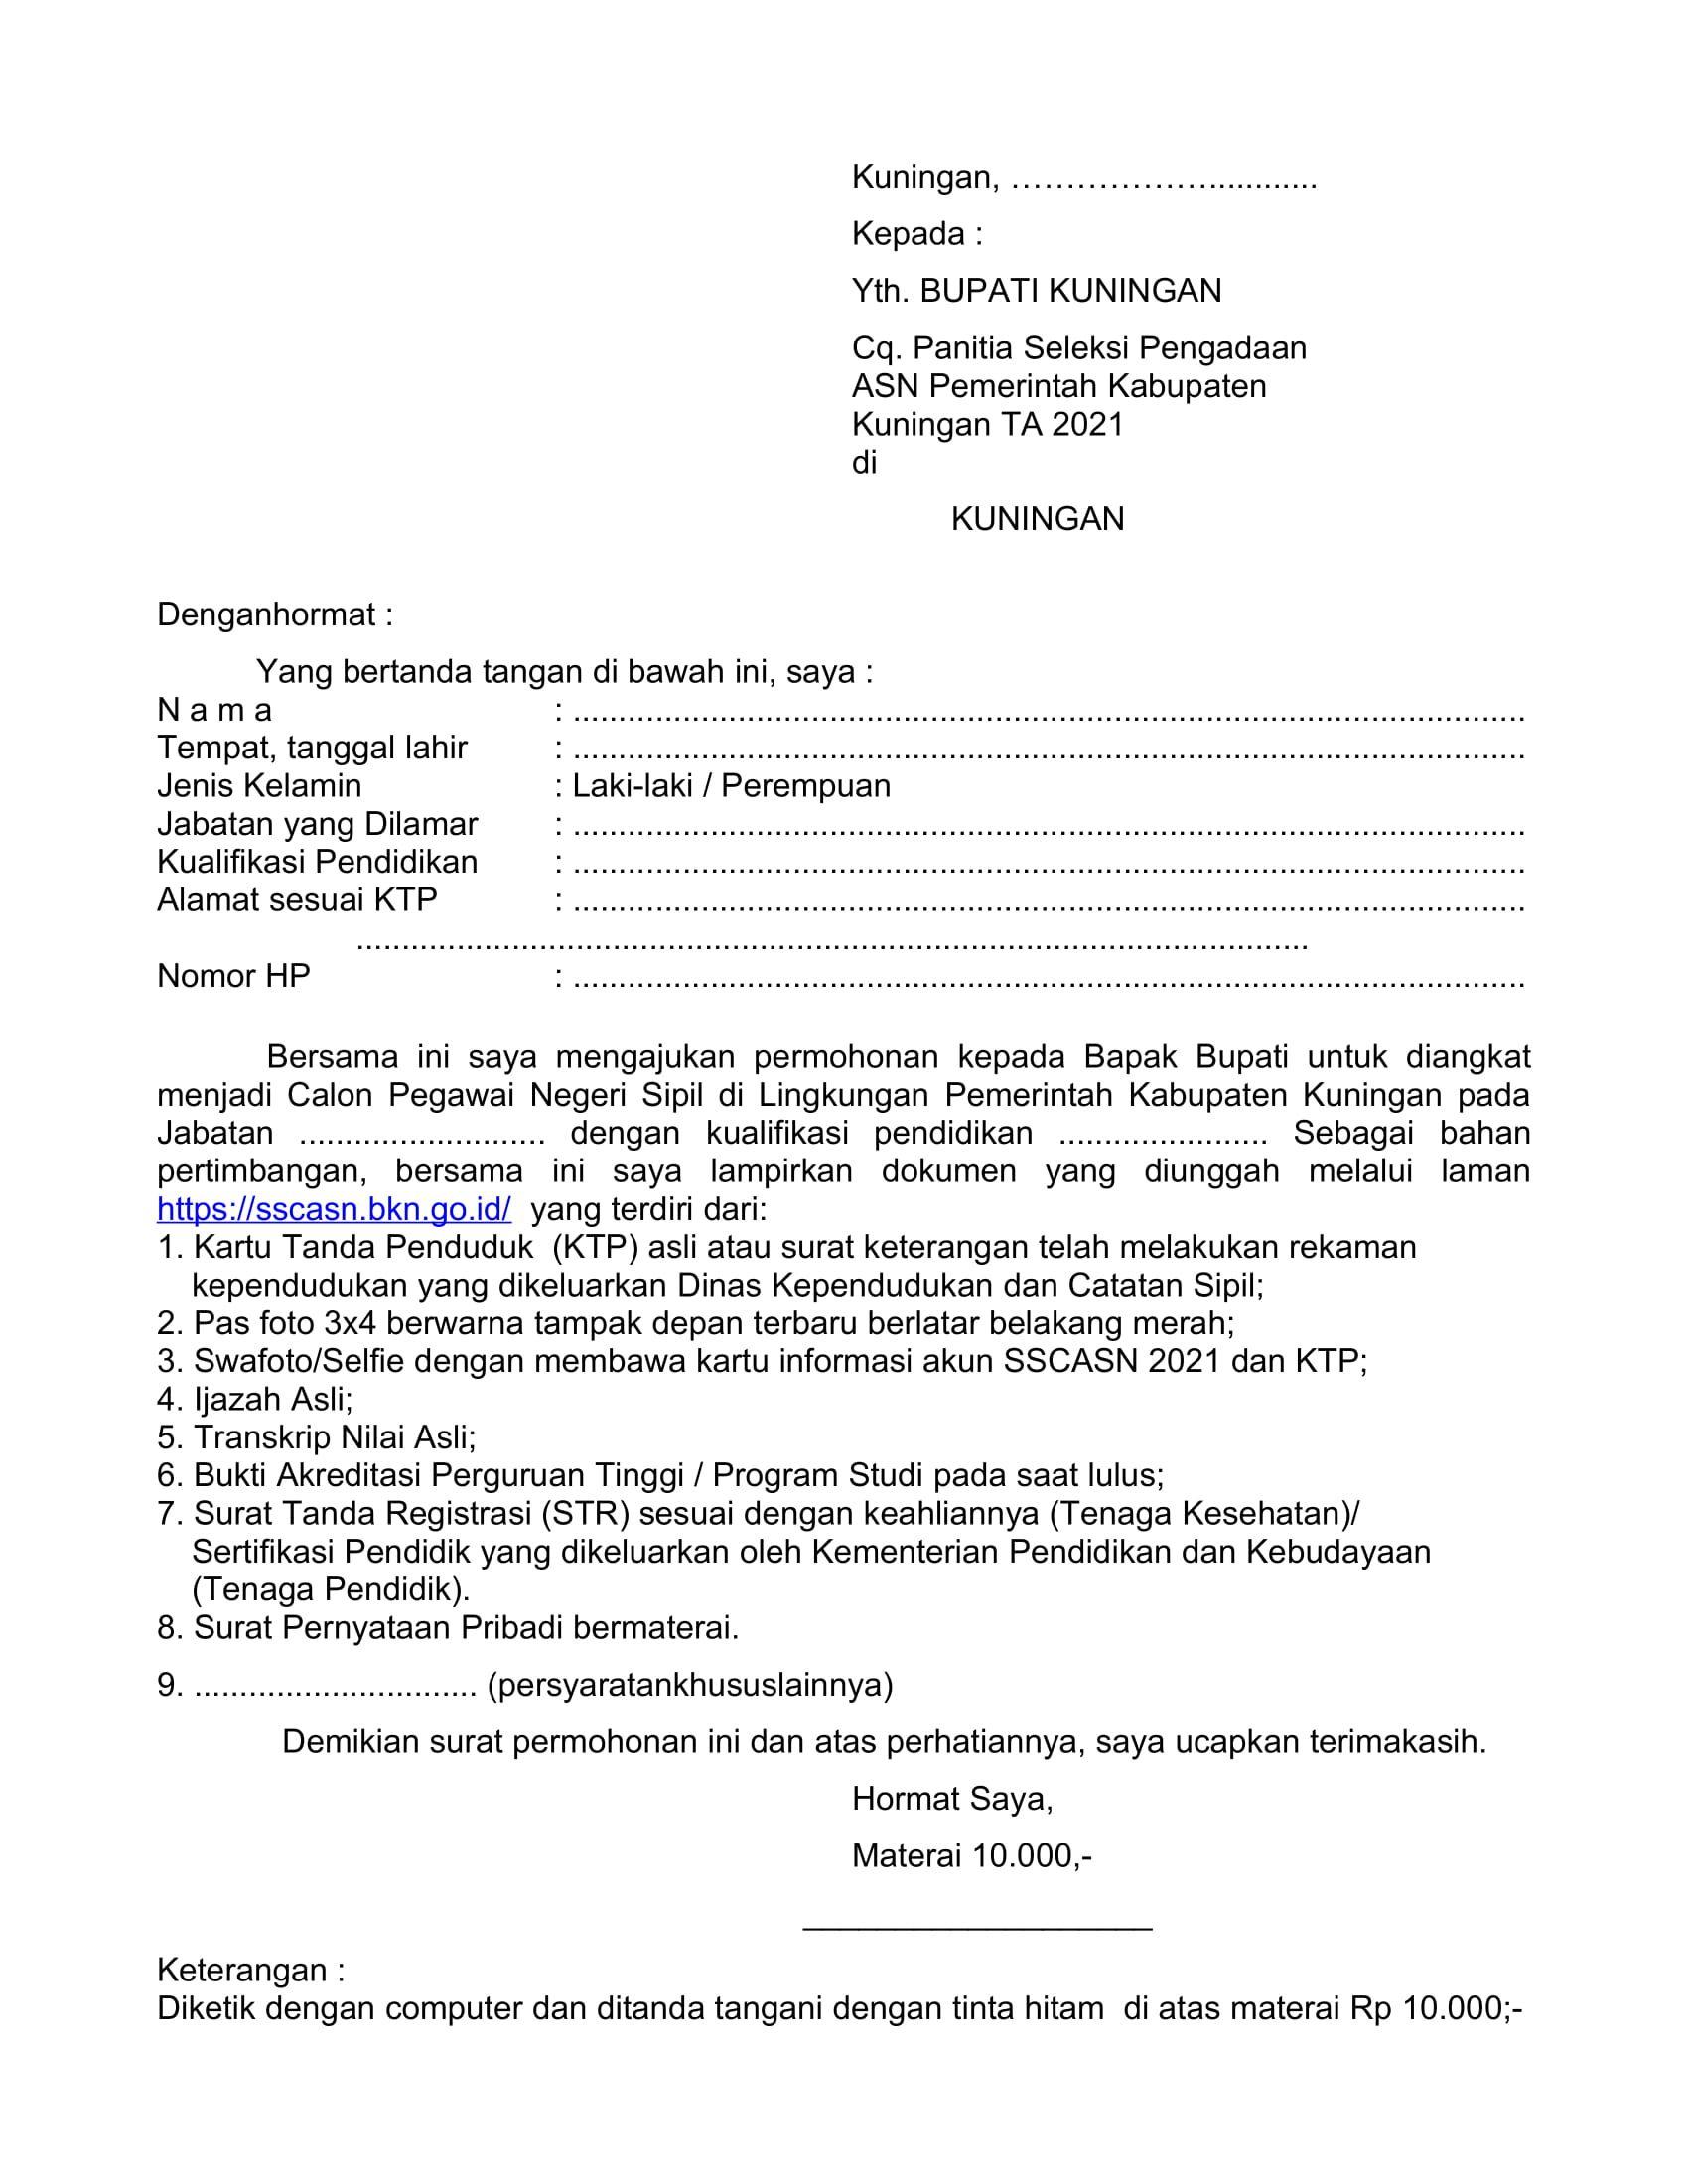 Contoh Surat Lamaran Cpns Provinsi Riau 2019 Pdf